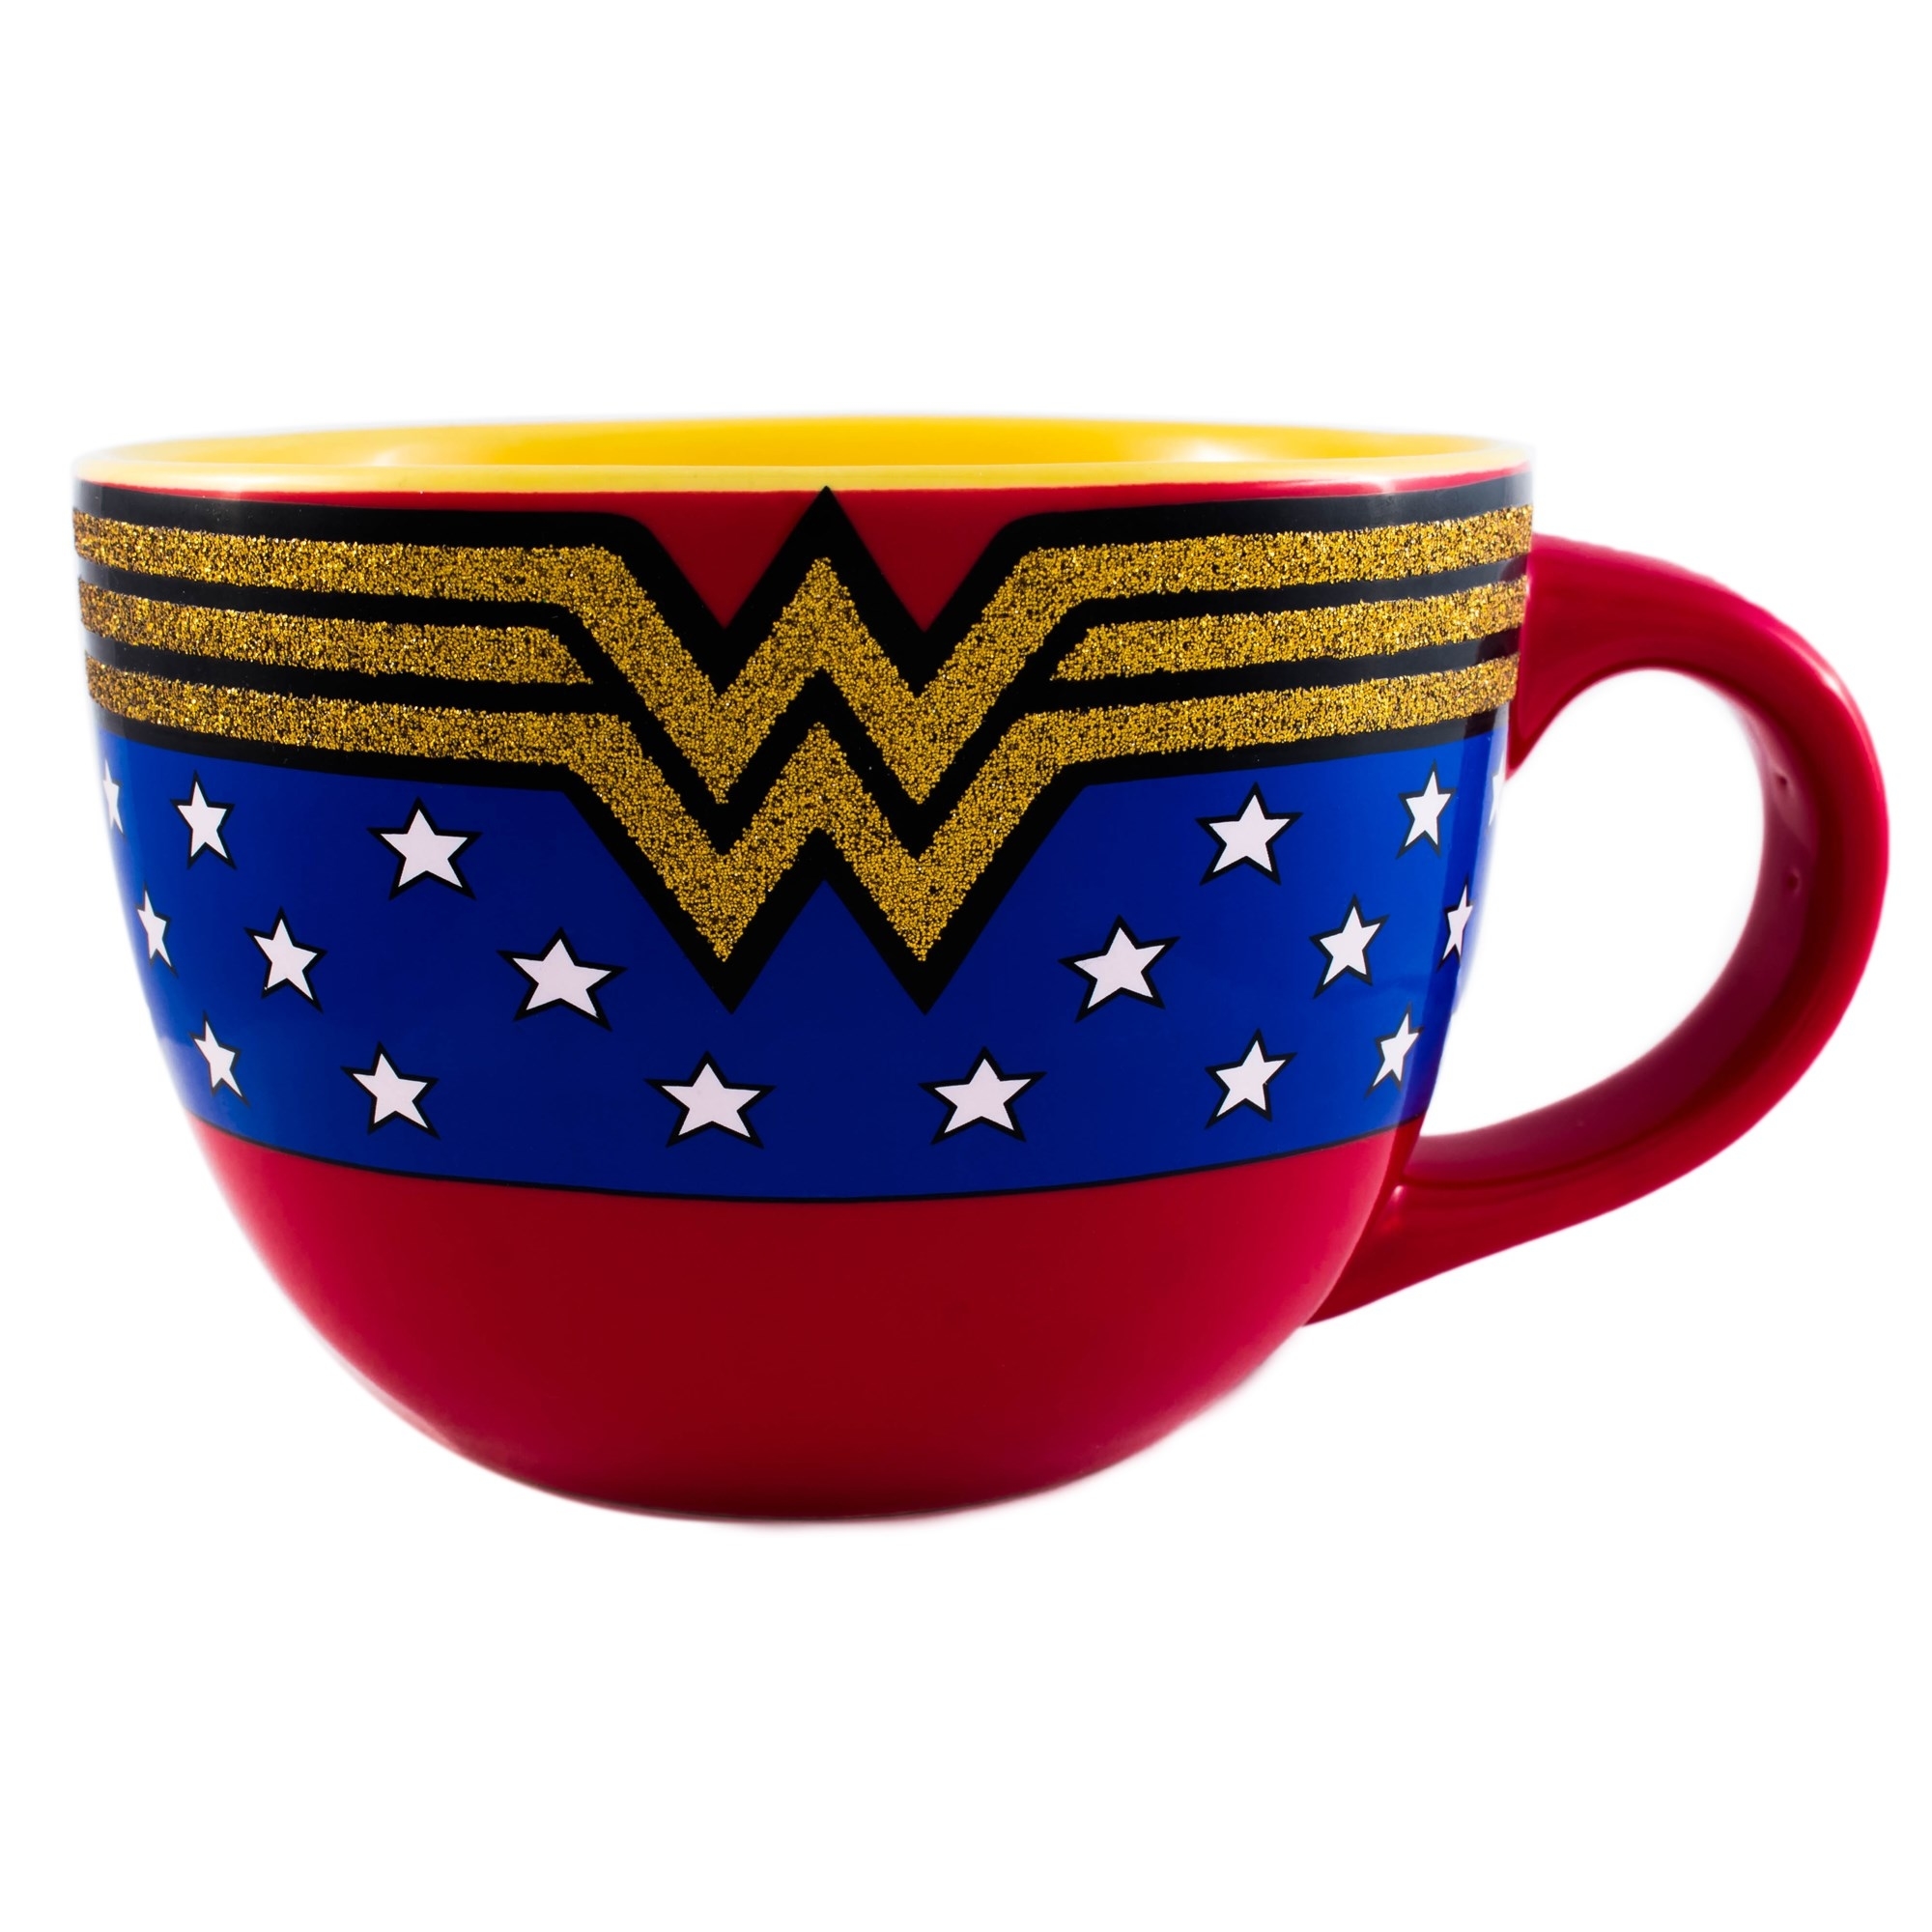 Wonder Woman Ceramic Soup Bowl - Glitter - image 1 of 2